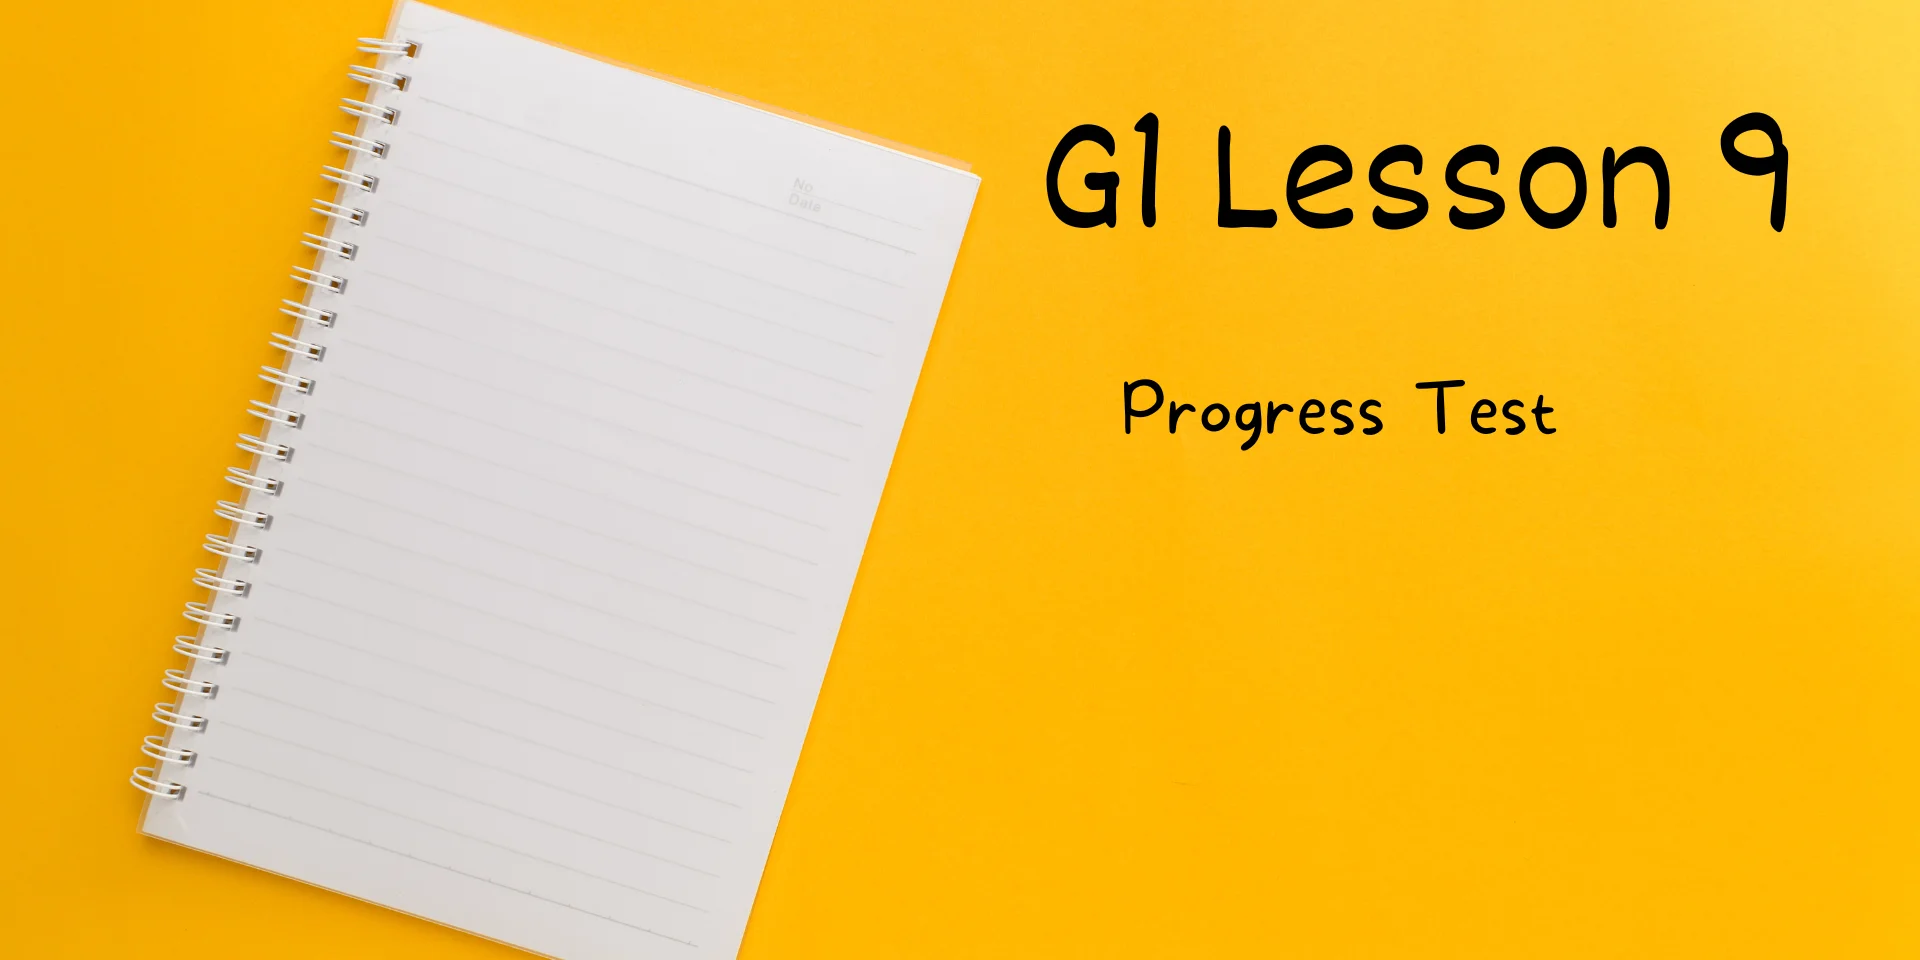 G1 Lesson 9 Progress Test 2